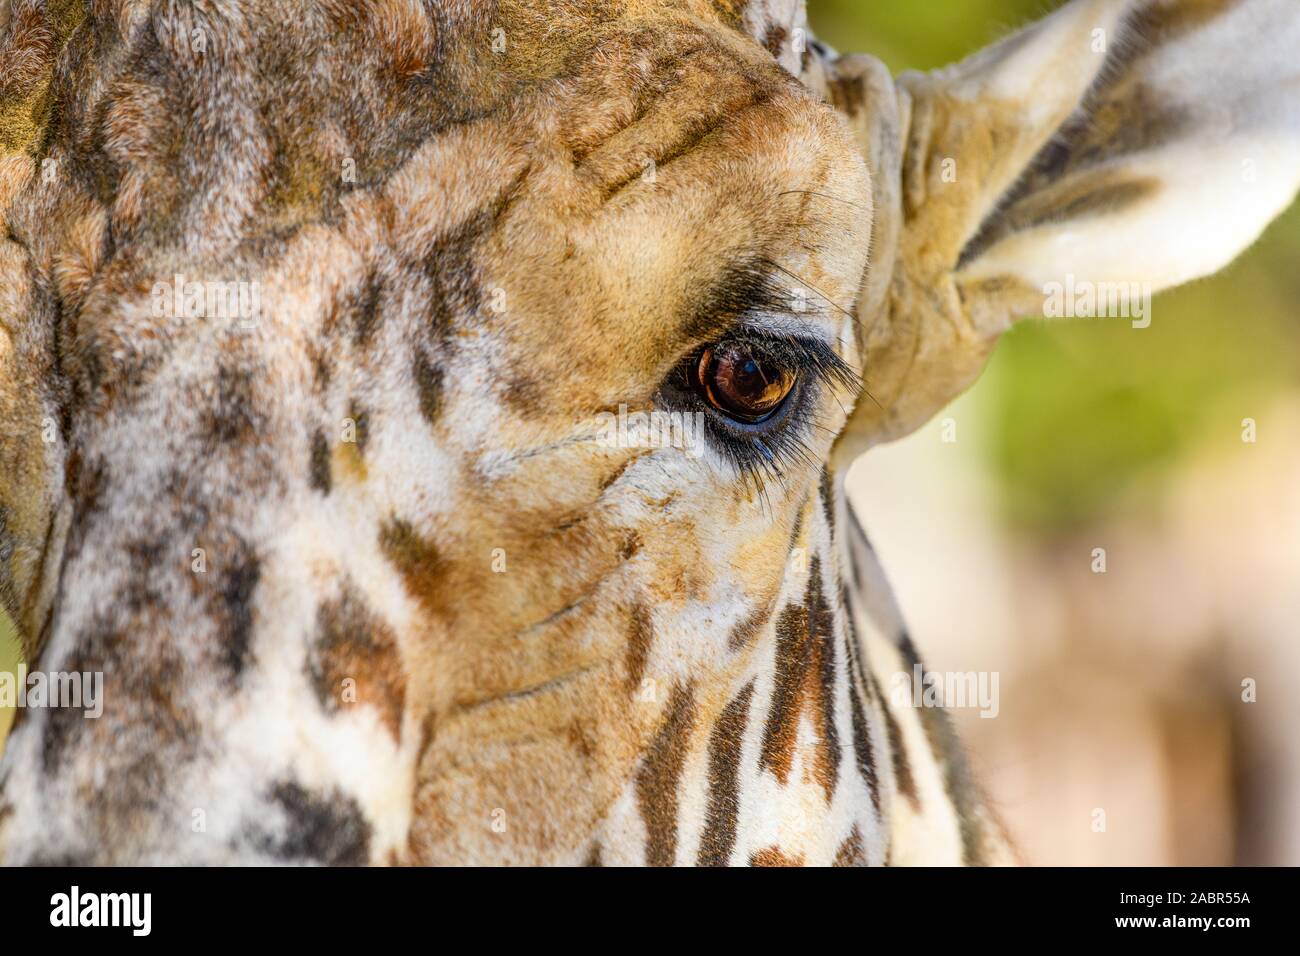 Girafe (Giraffa) Gros plan du visage et des yeux Banque D'Images